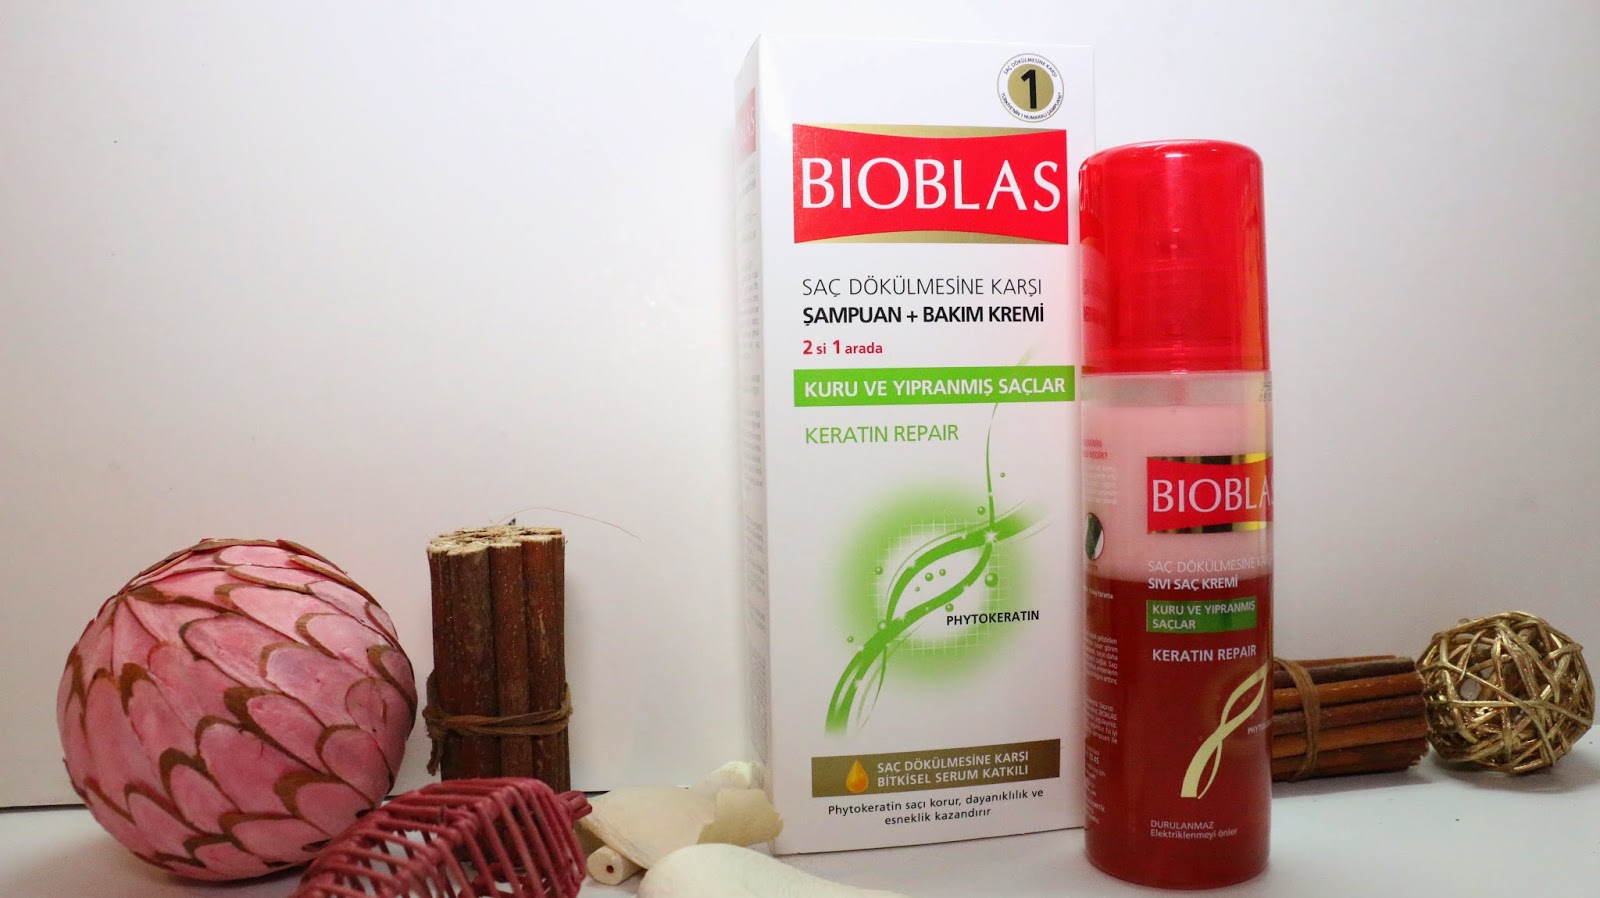 BİOTA - restorex - bioblas - nutraxin - biolady - biobaby - bioder - makyaj blogları - kozmetik blogları - sebnems blog  - saç uzatma